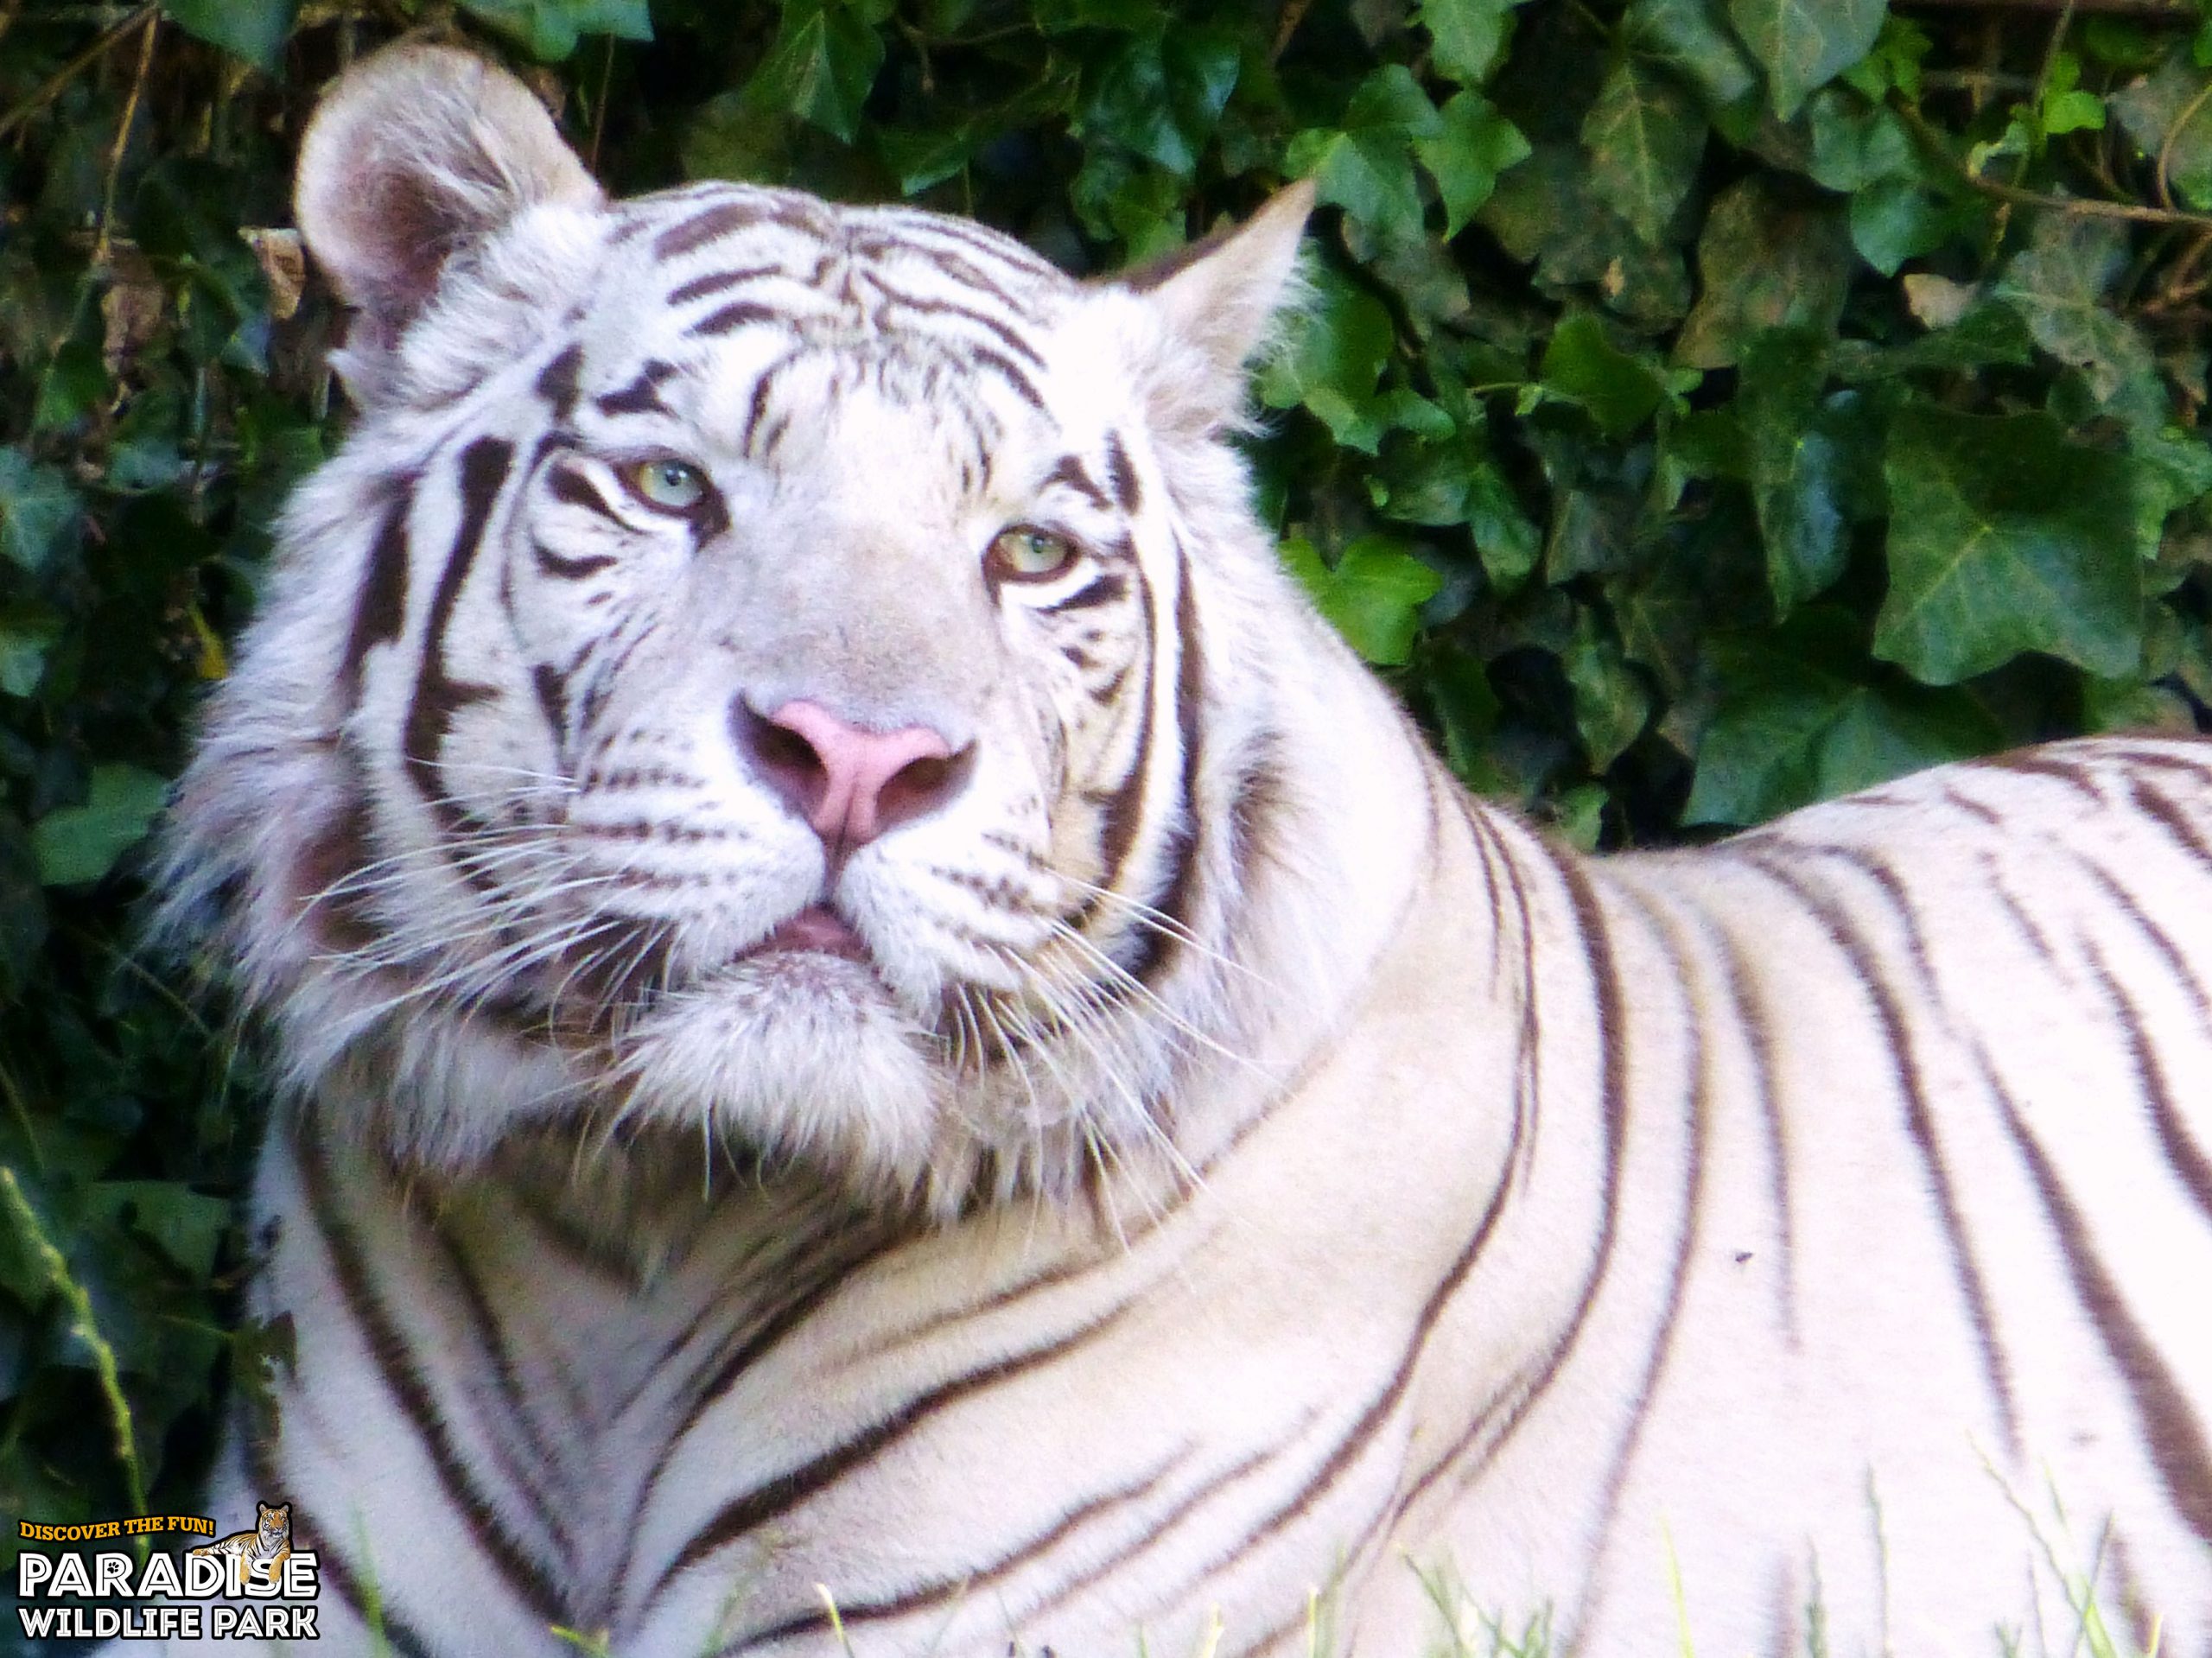 Baikal the White Tiger will not be returning to Paradise Wildlife Park